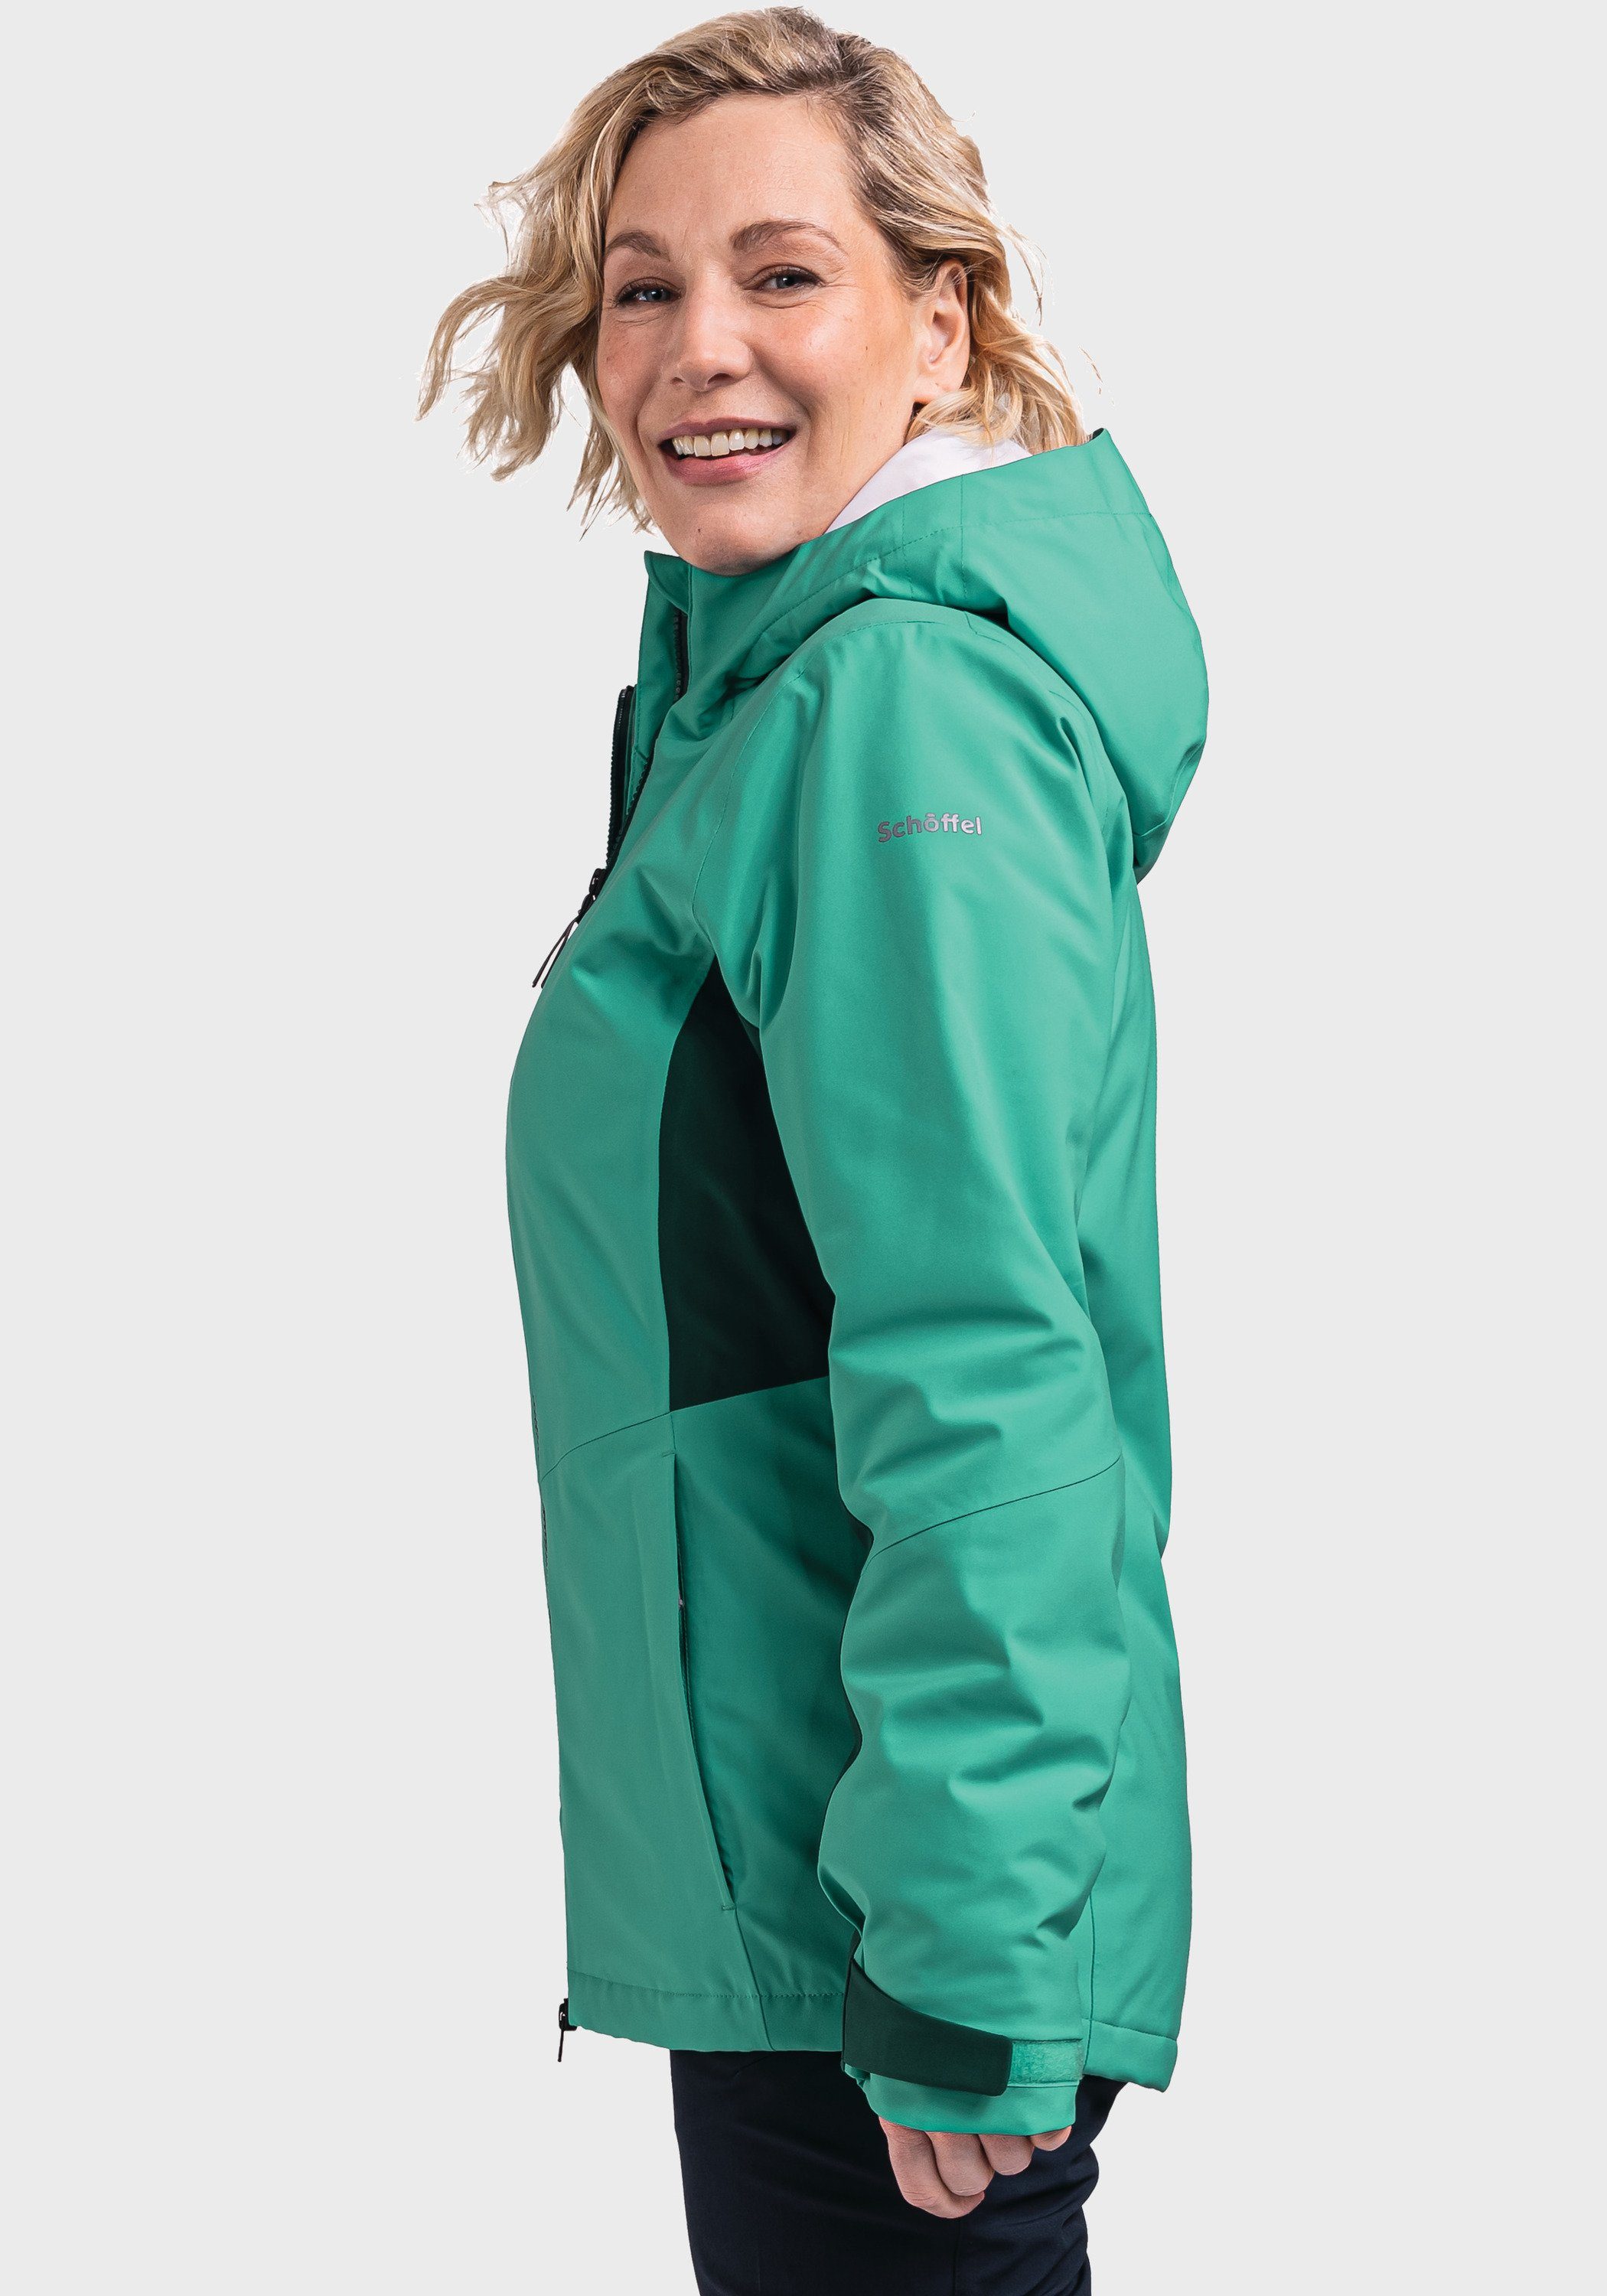 Jacket grün Outdoorjacke Torspitze Schöffel L